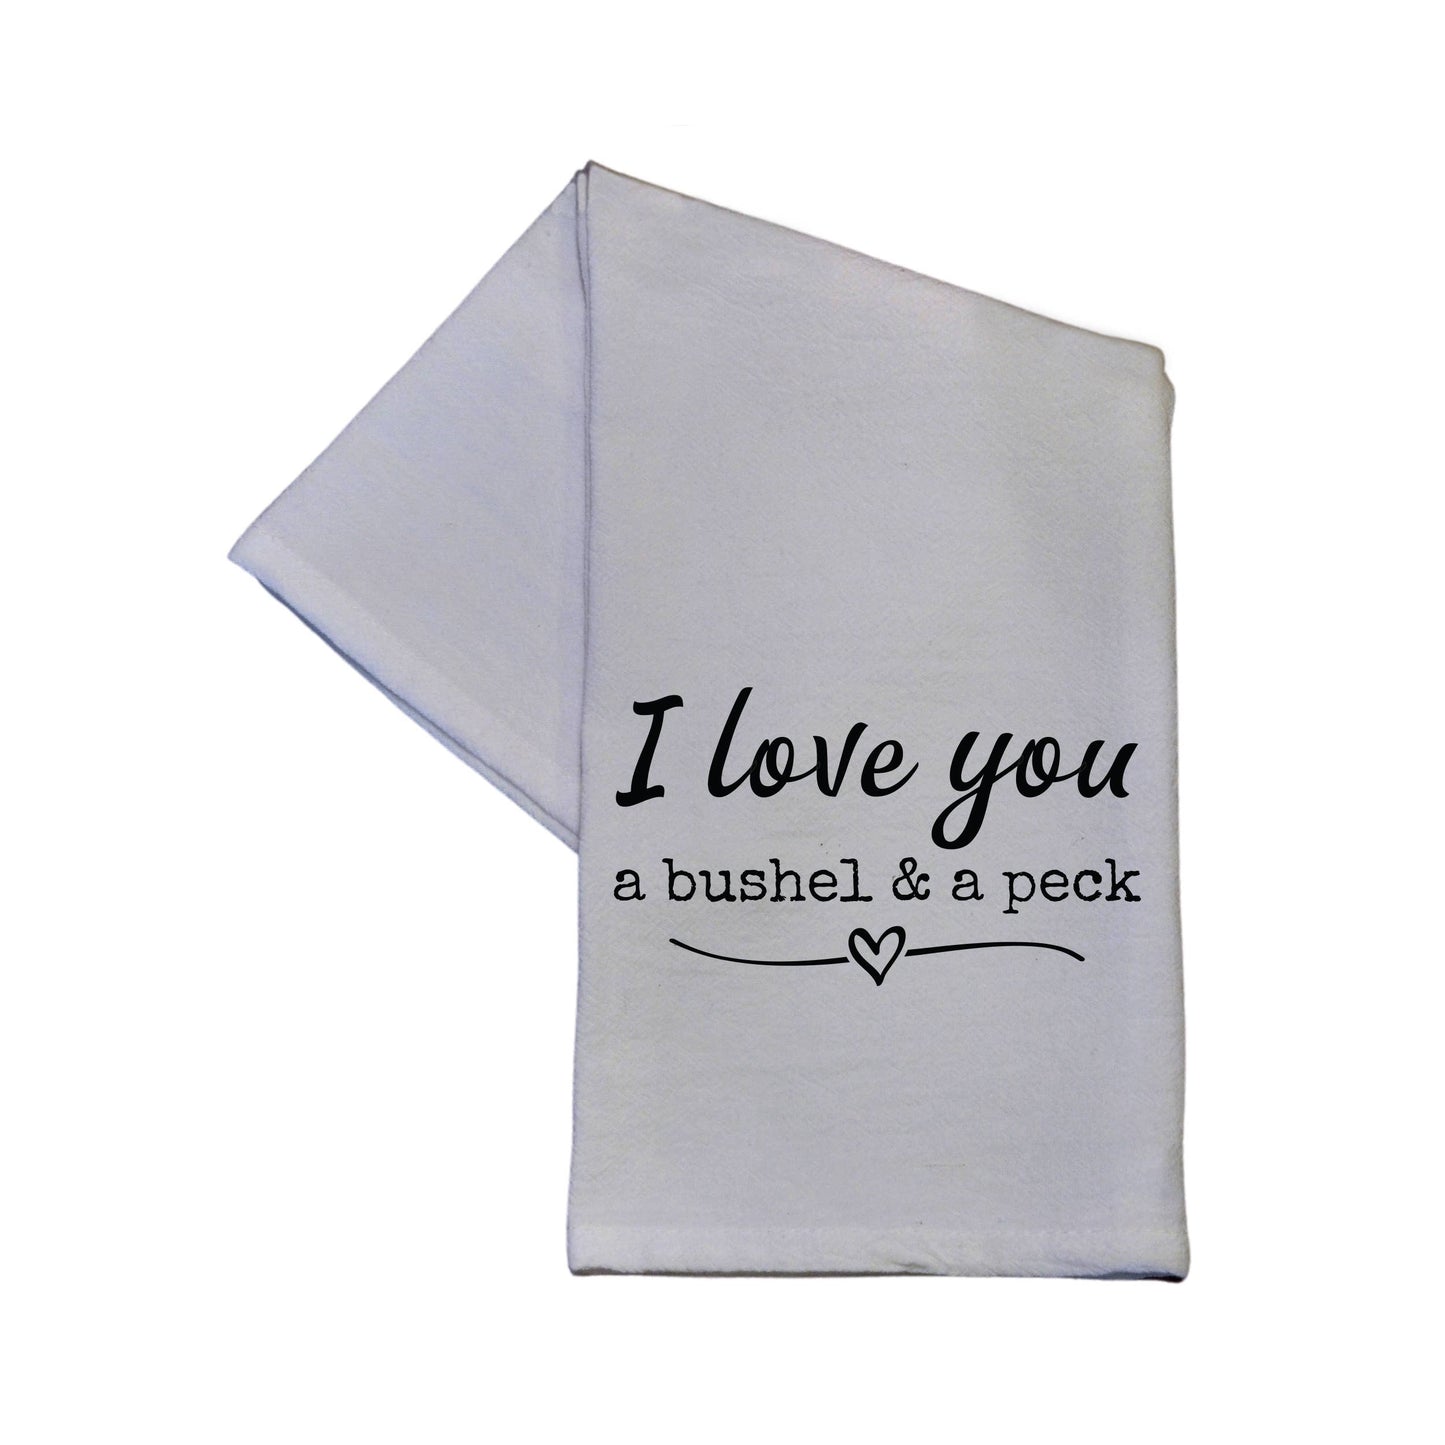 Driftless Studios - I Love You A Bushel and A Peck Hand Towel 16x24